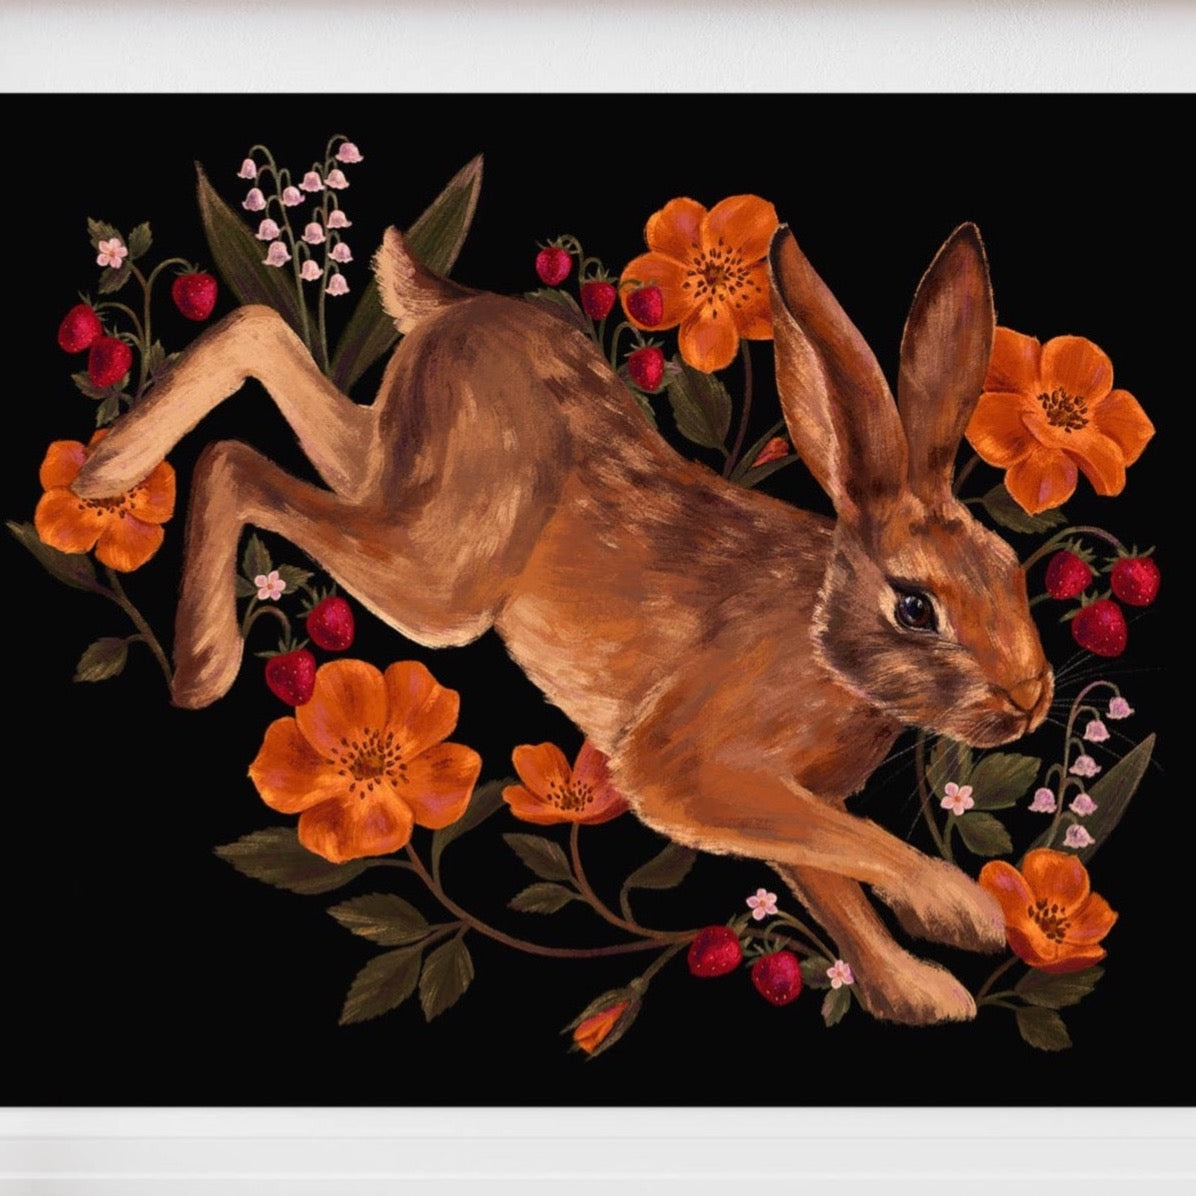 Rabbit Forest Art Print by Cailee Corbett - 8” x 10”